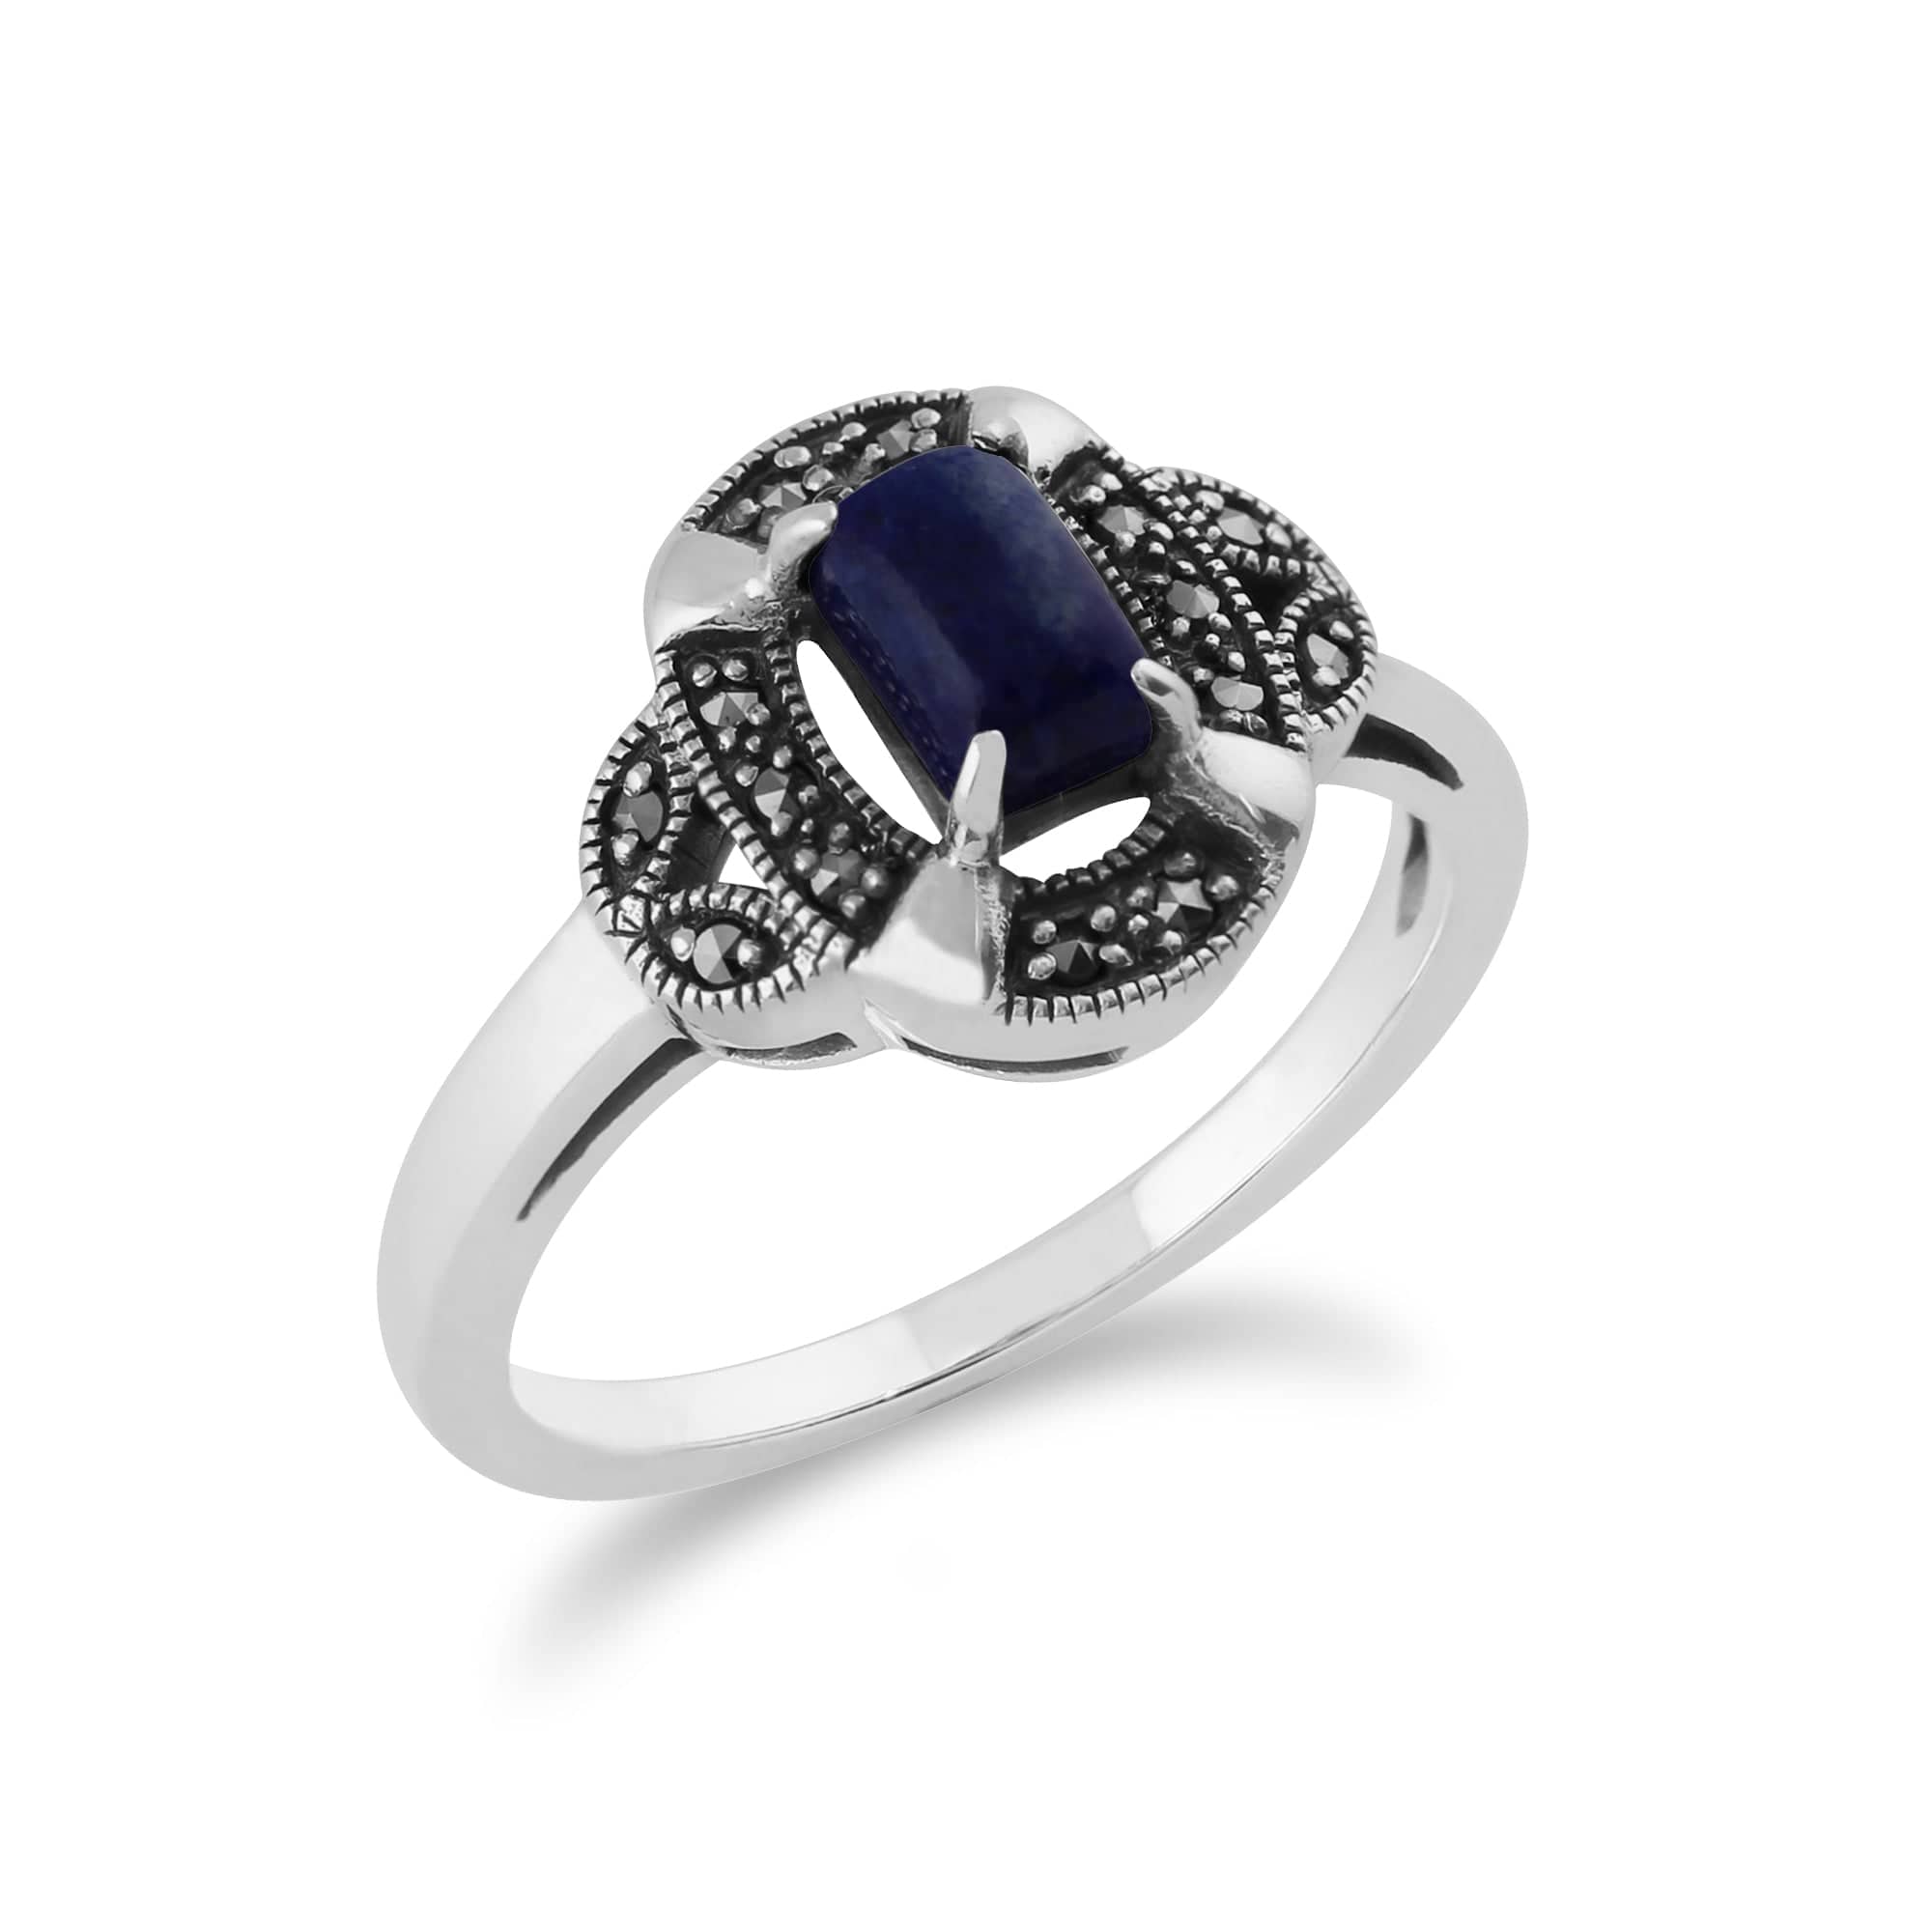 Gemondo 925 Sterling Silver 0.50ct Lapis Lazuli & Marcasite Art Deco Ring Image 2